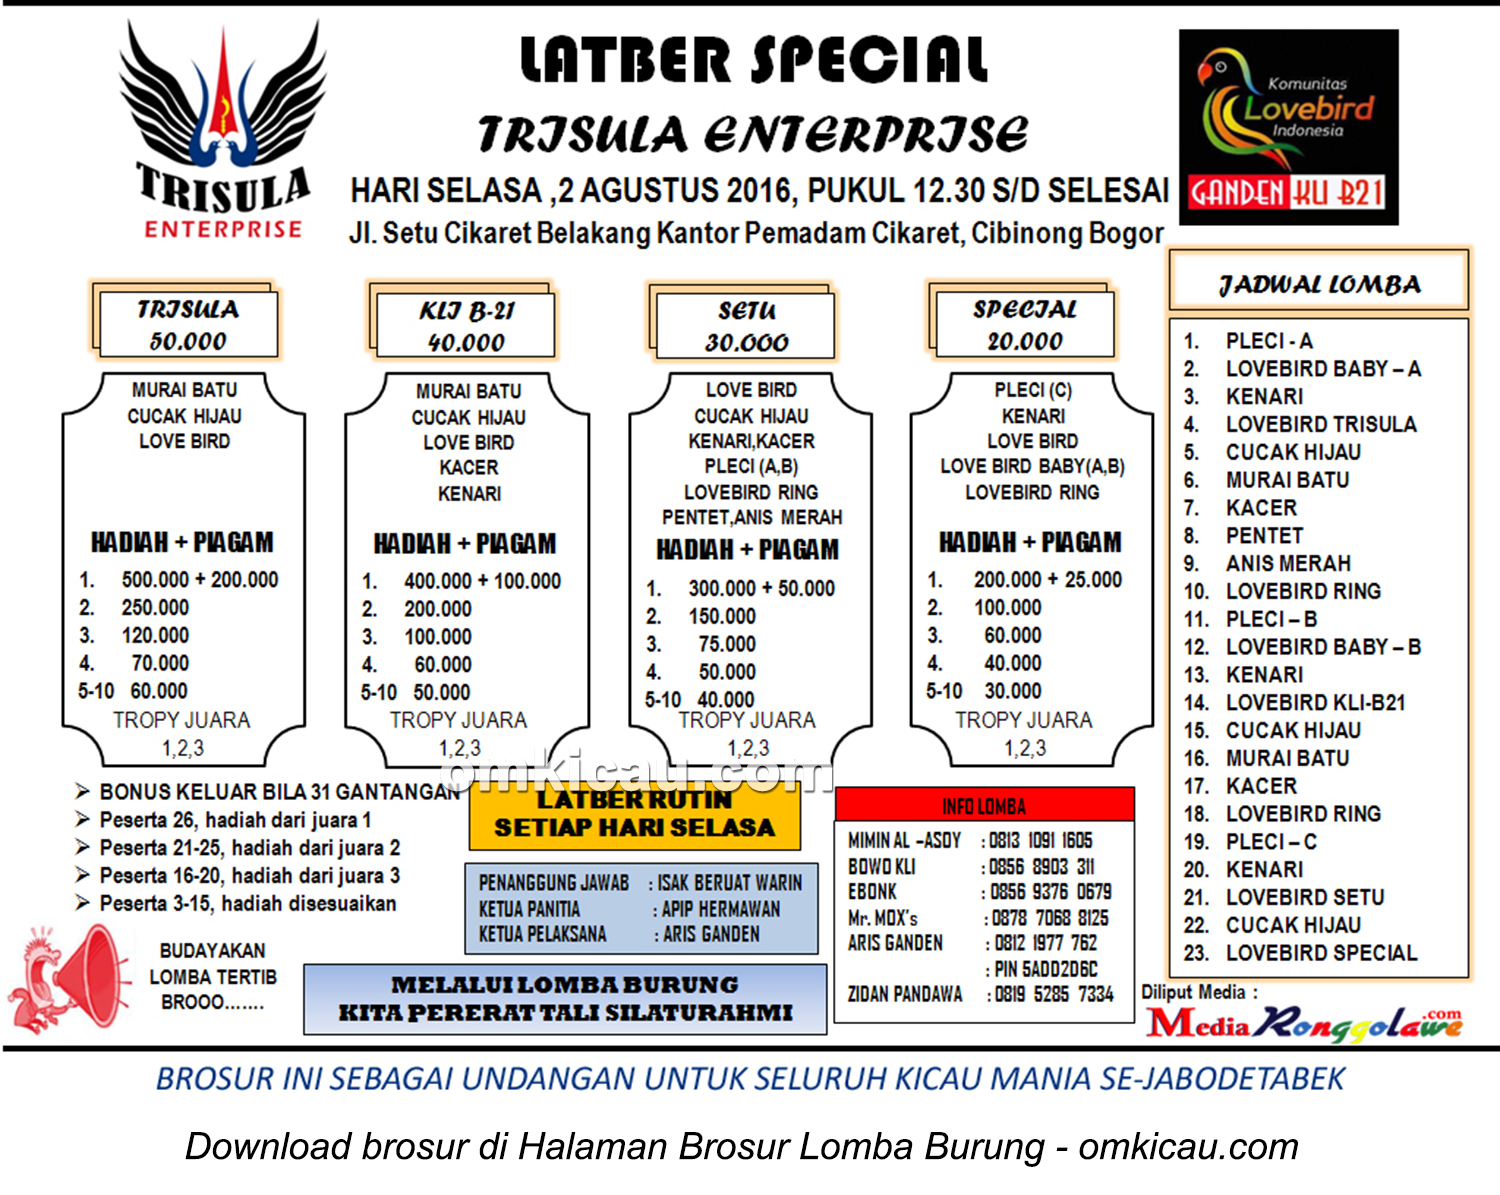 Brosur Latber Special Trisula Enterprise, Bogor, 2 Agustus 2016